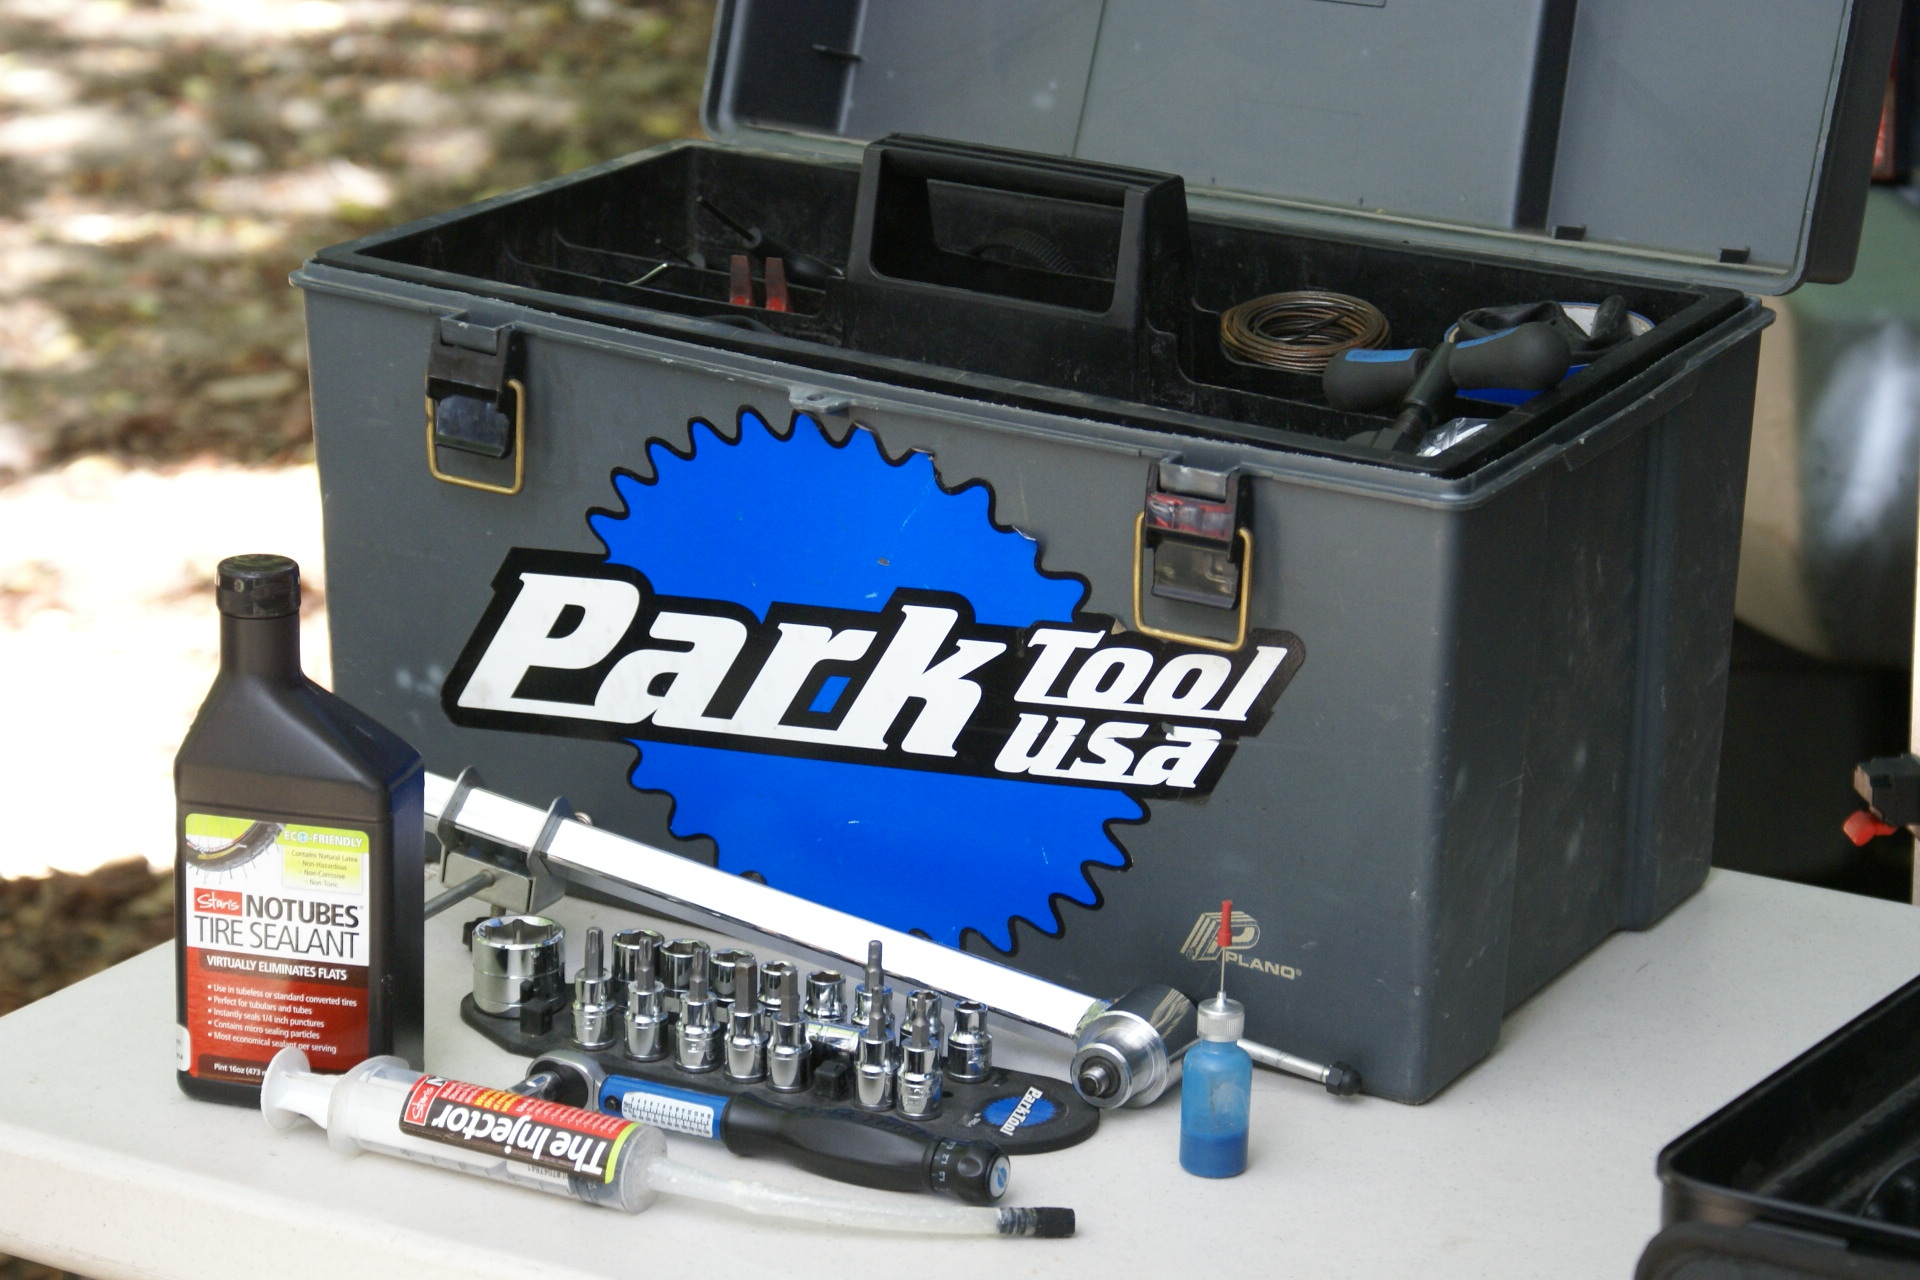 Park tool kit